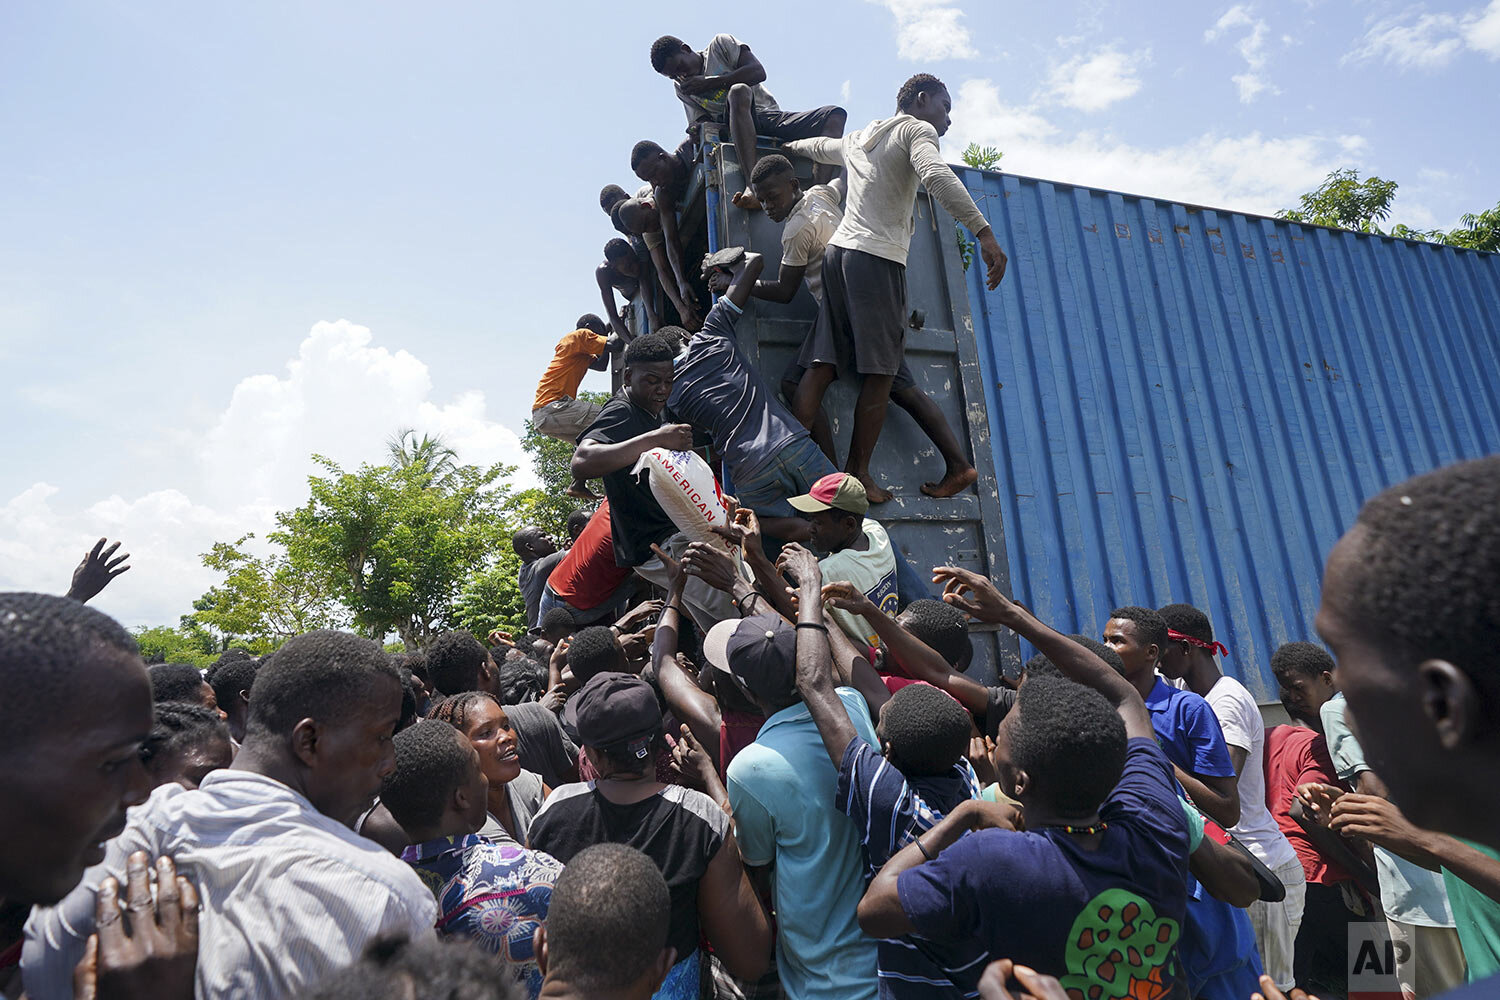  Residents overtake an aid truck in Vye Terre, Haiti, Aug. 20, 2021 as shipments arrive to Haiti a week after the 7.2 magnitude quake. (AP Photo/Fernando Llano, File) 